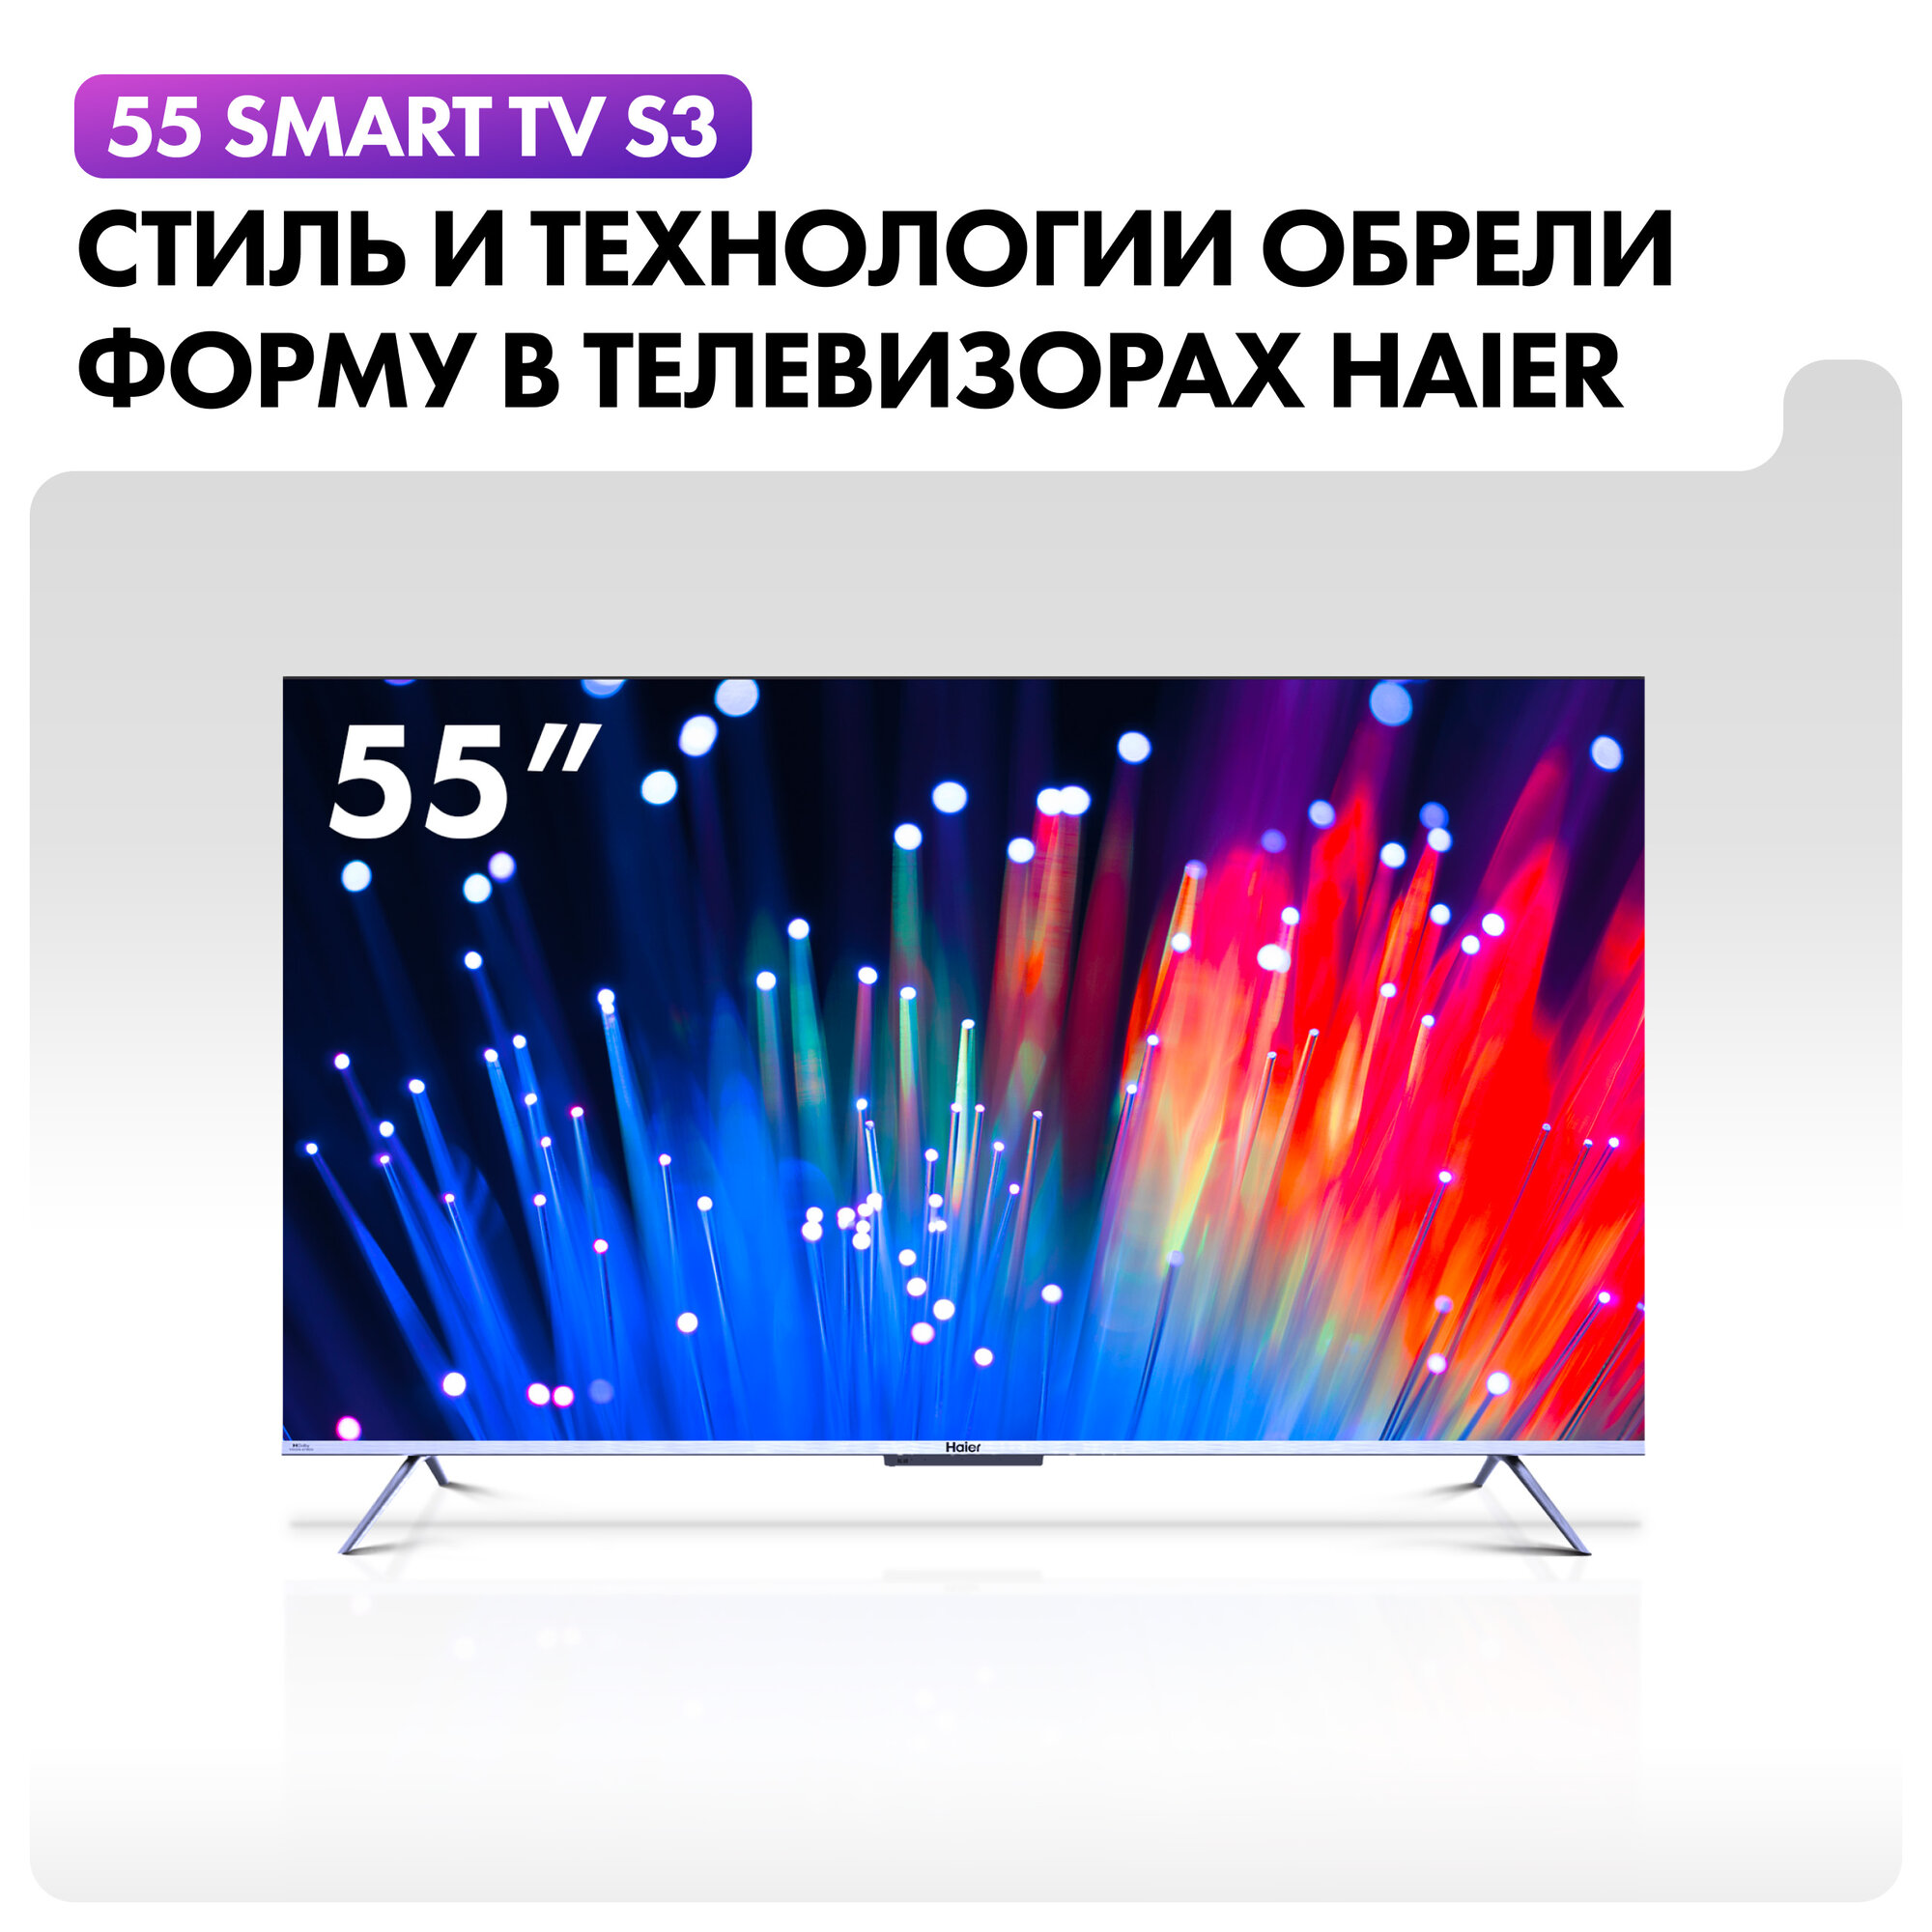 55" Телевизор Haier 55 Smart TV S3 RU, серый